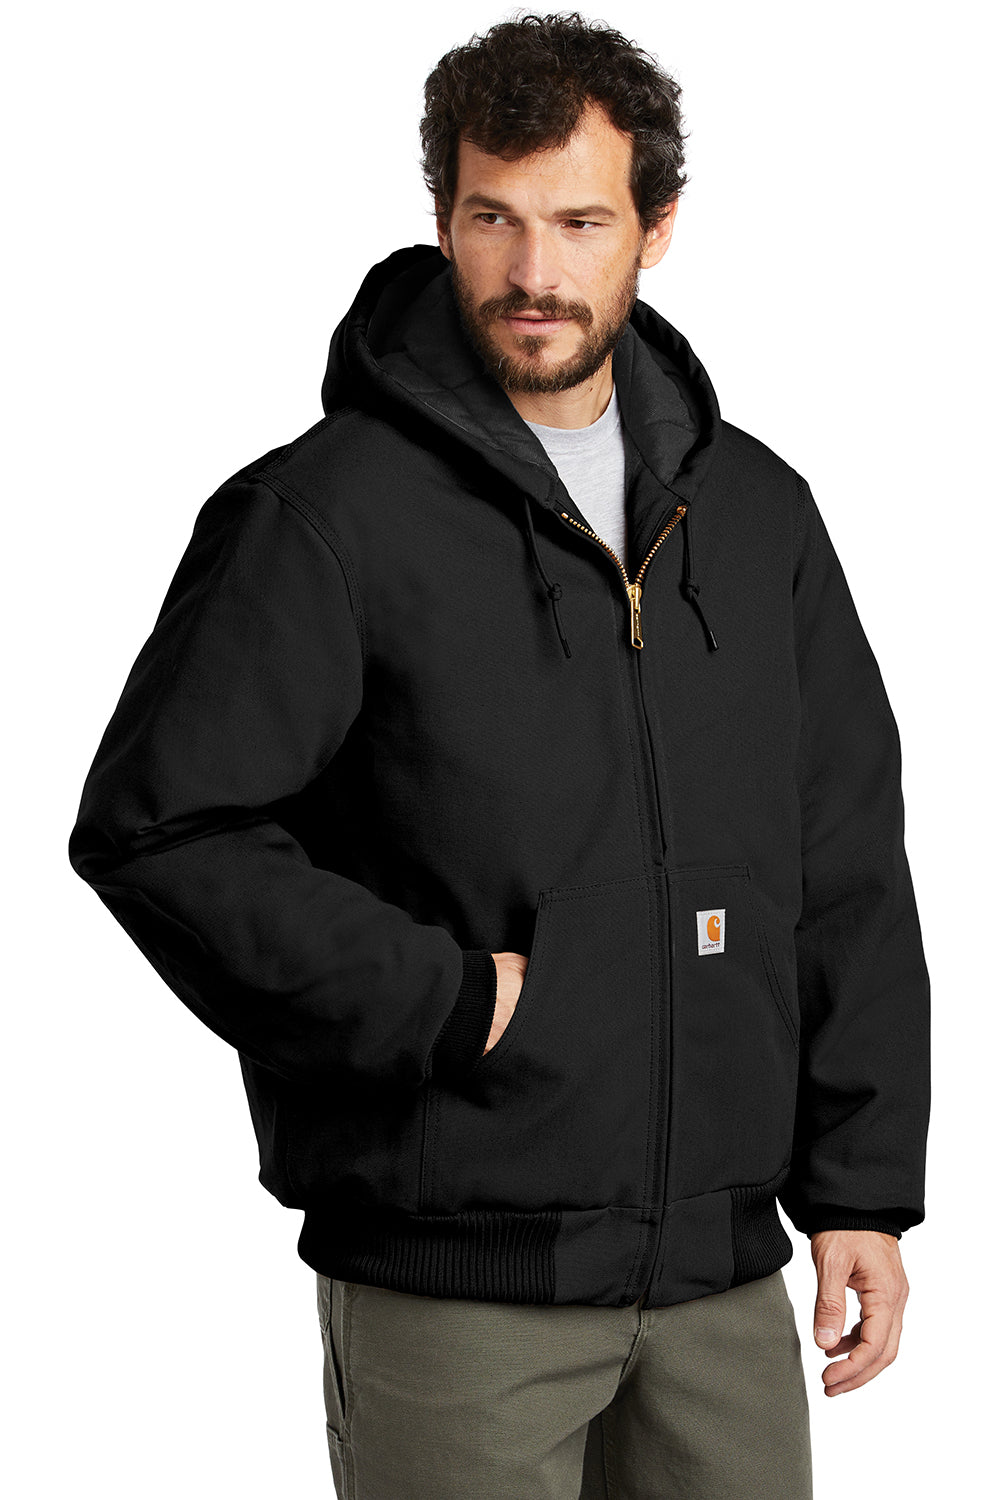 Carhartt CTSJ140/CTTSJ140 Mens Wind & Water Resistant Duck Cloth Full Zip Hooded Work Jacket Black Model 3Q